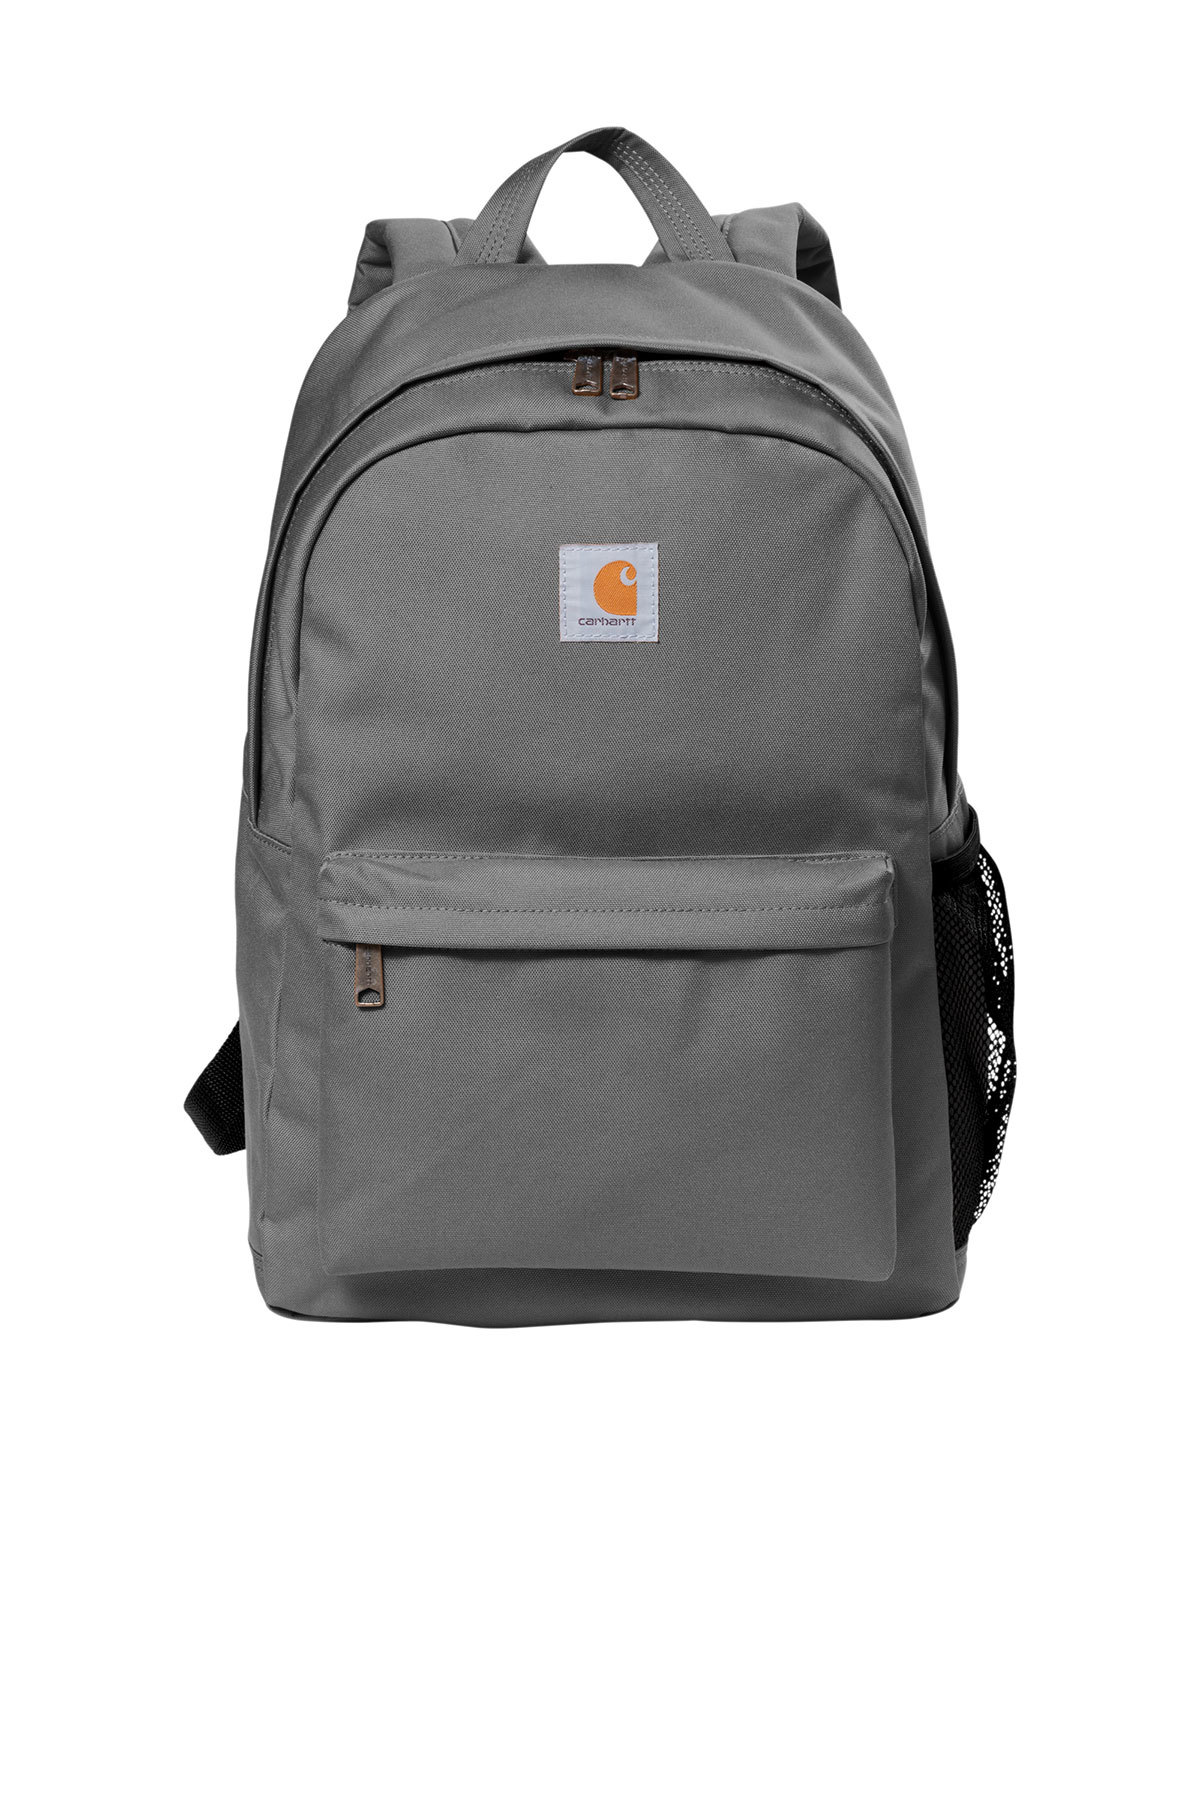 Carhartt Canvas Backpack CT89241804, Black